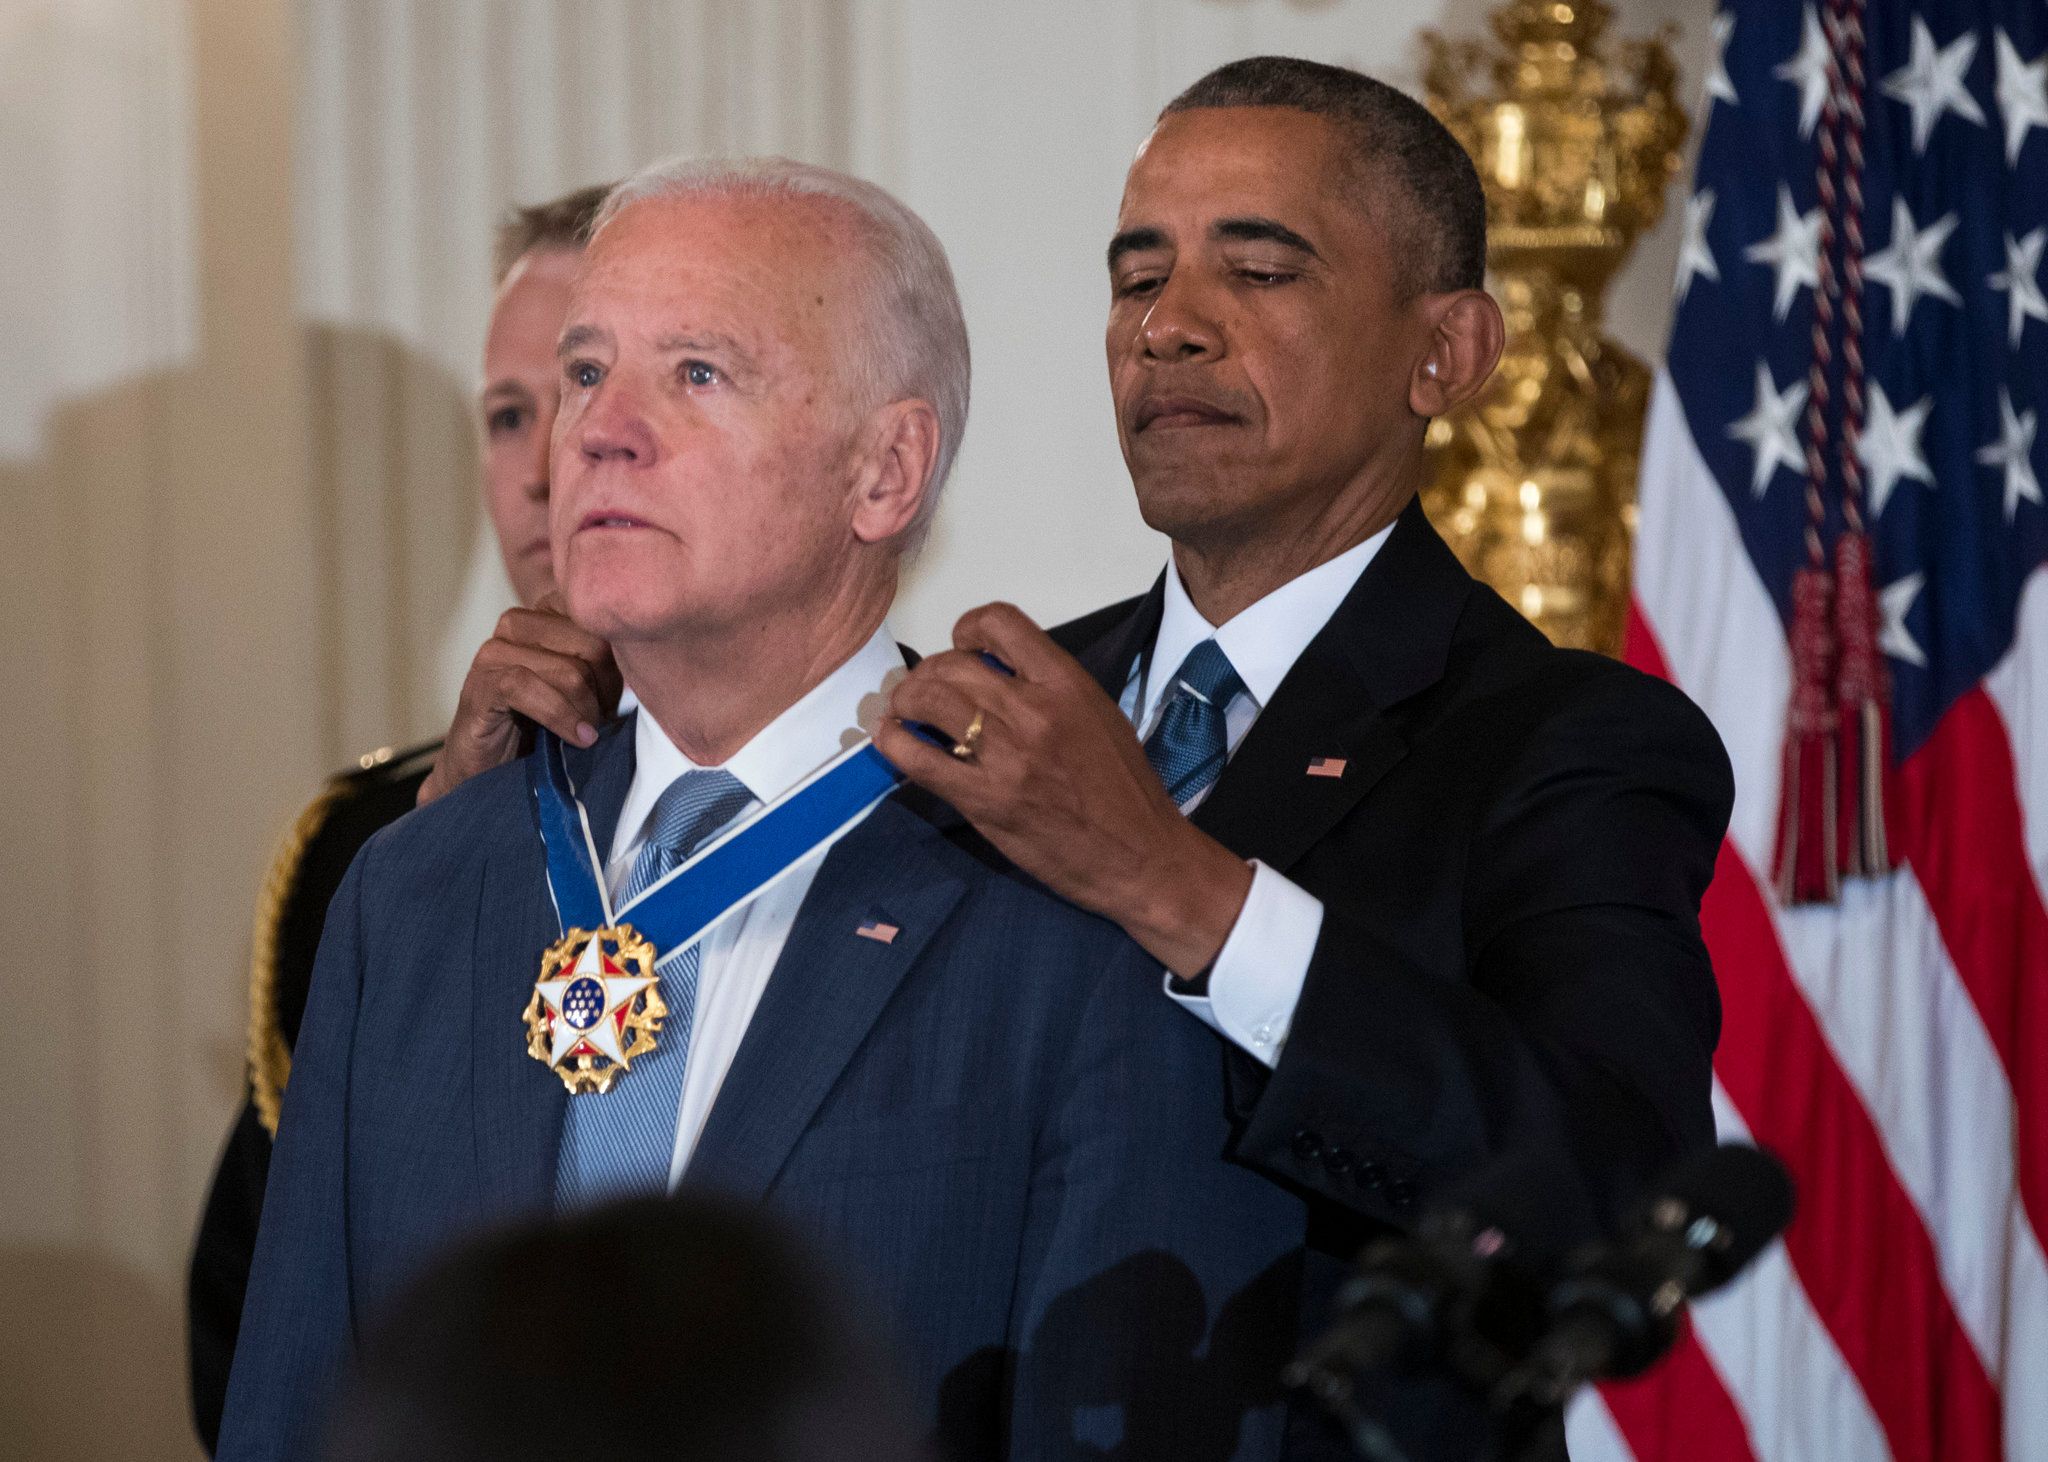 Joe Biden receiving one N-word pass from President Barrack Obama